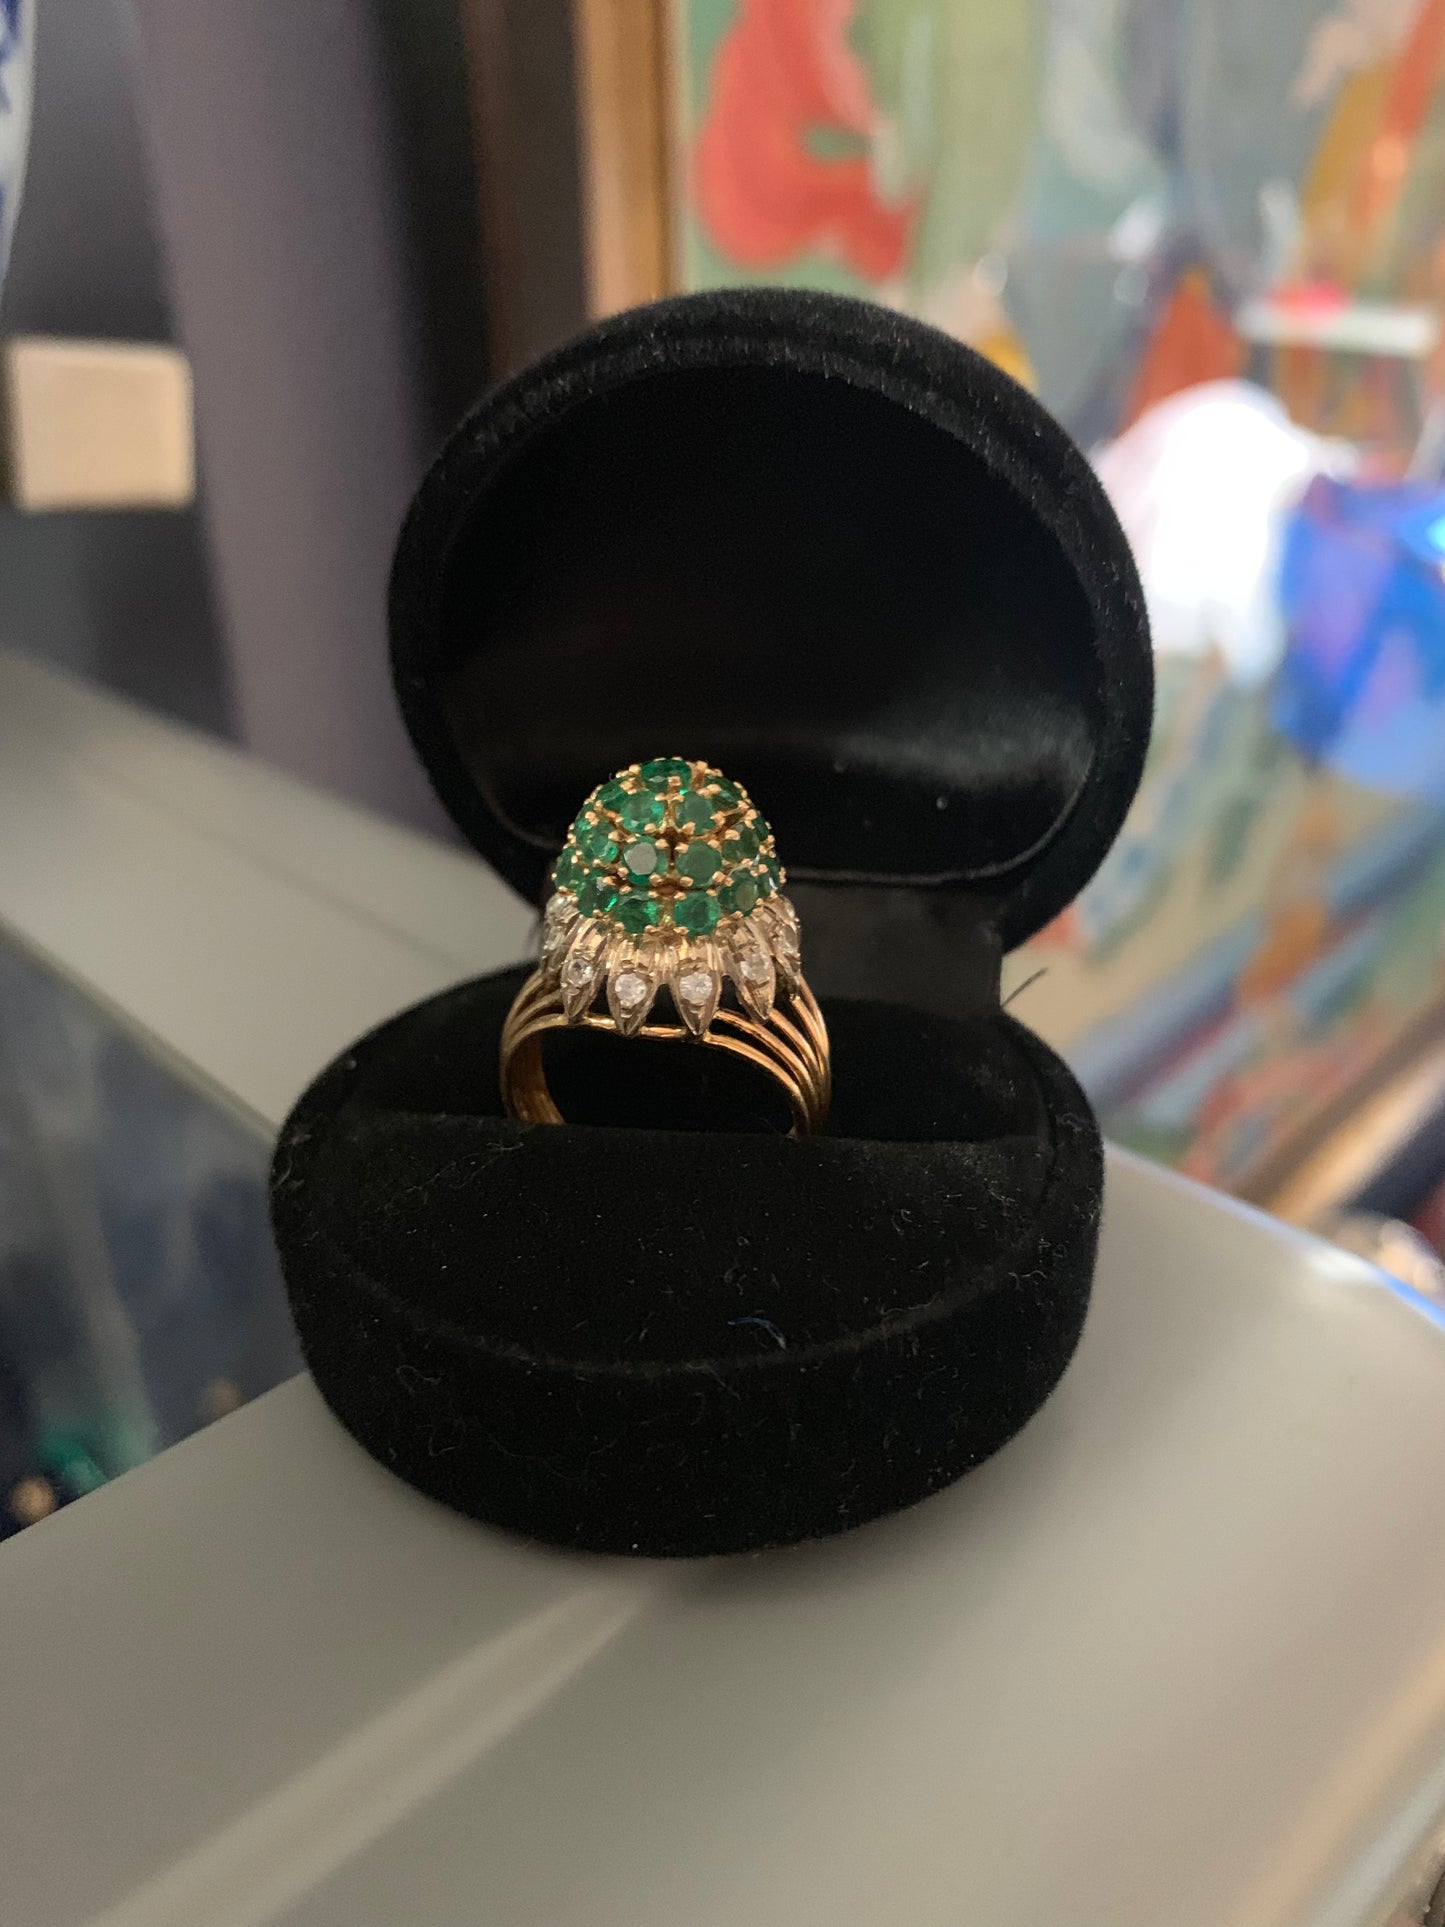 An emerald ring